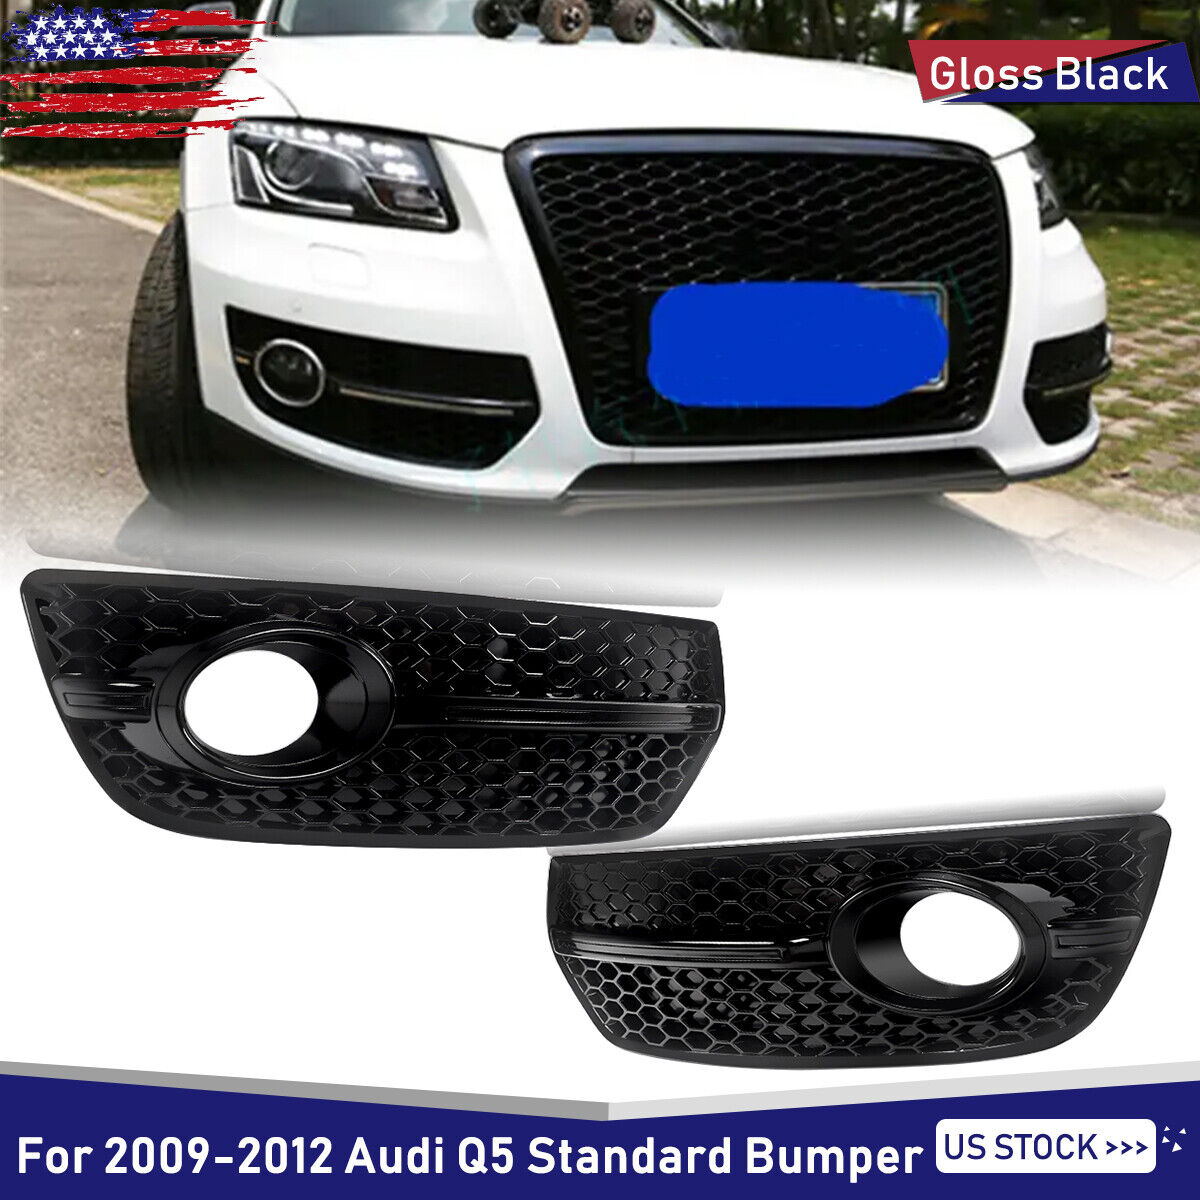 For 2009-2012 Audi Q5 Basic Bumper Fog Light Grille Covers SQ5 Look Gloss Black